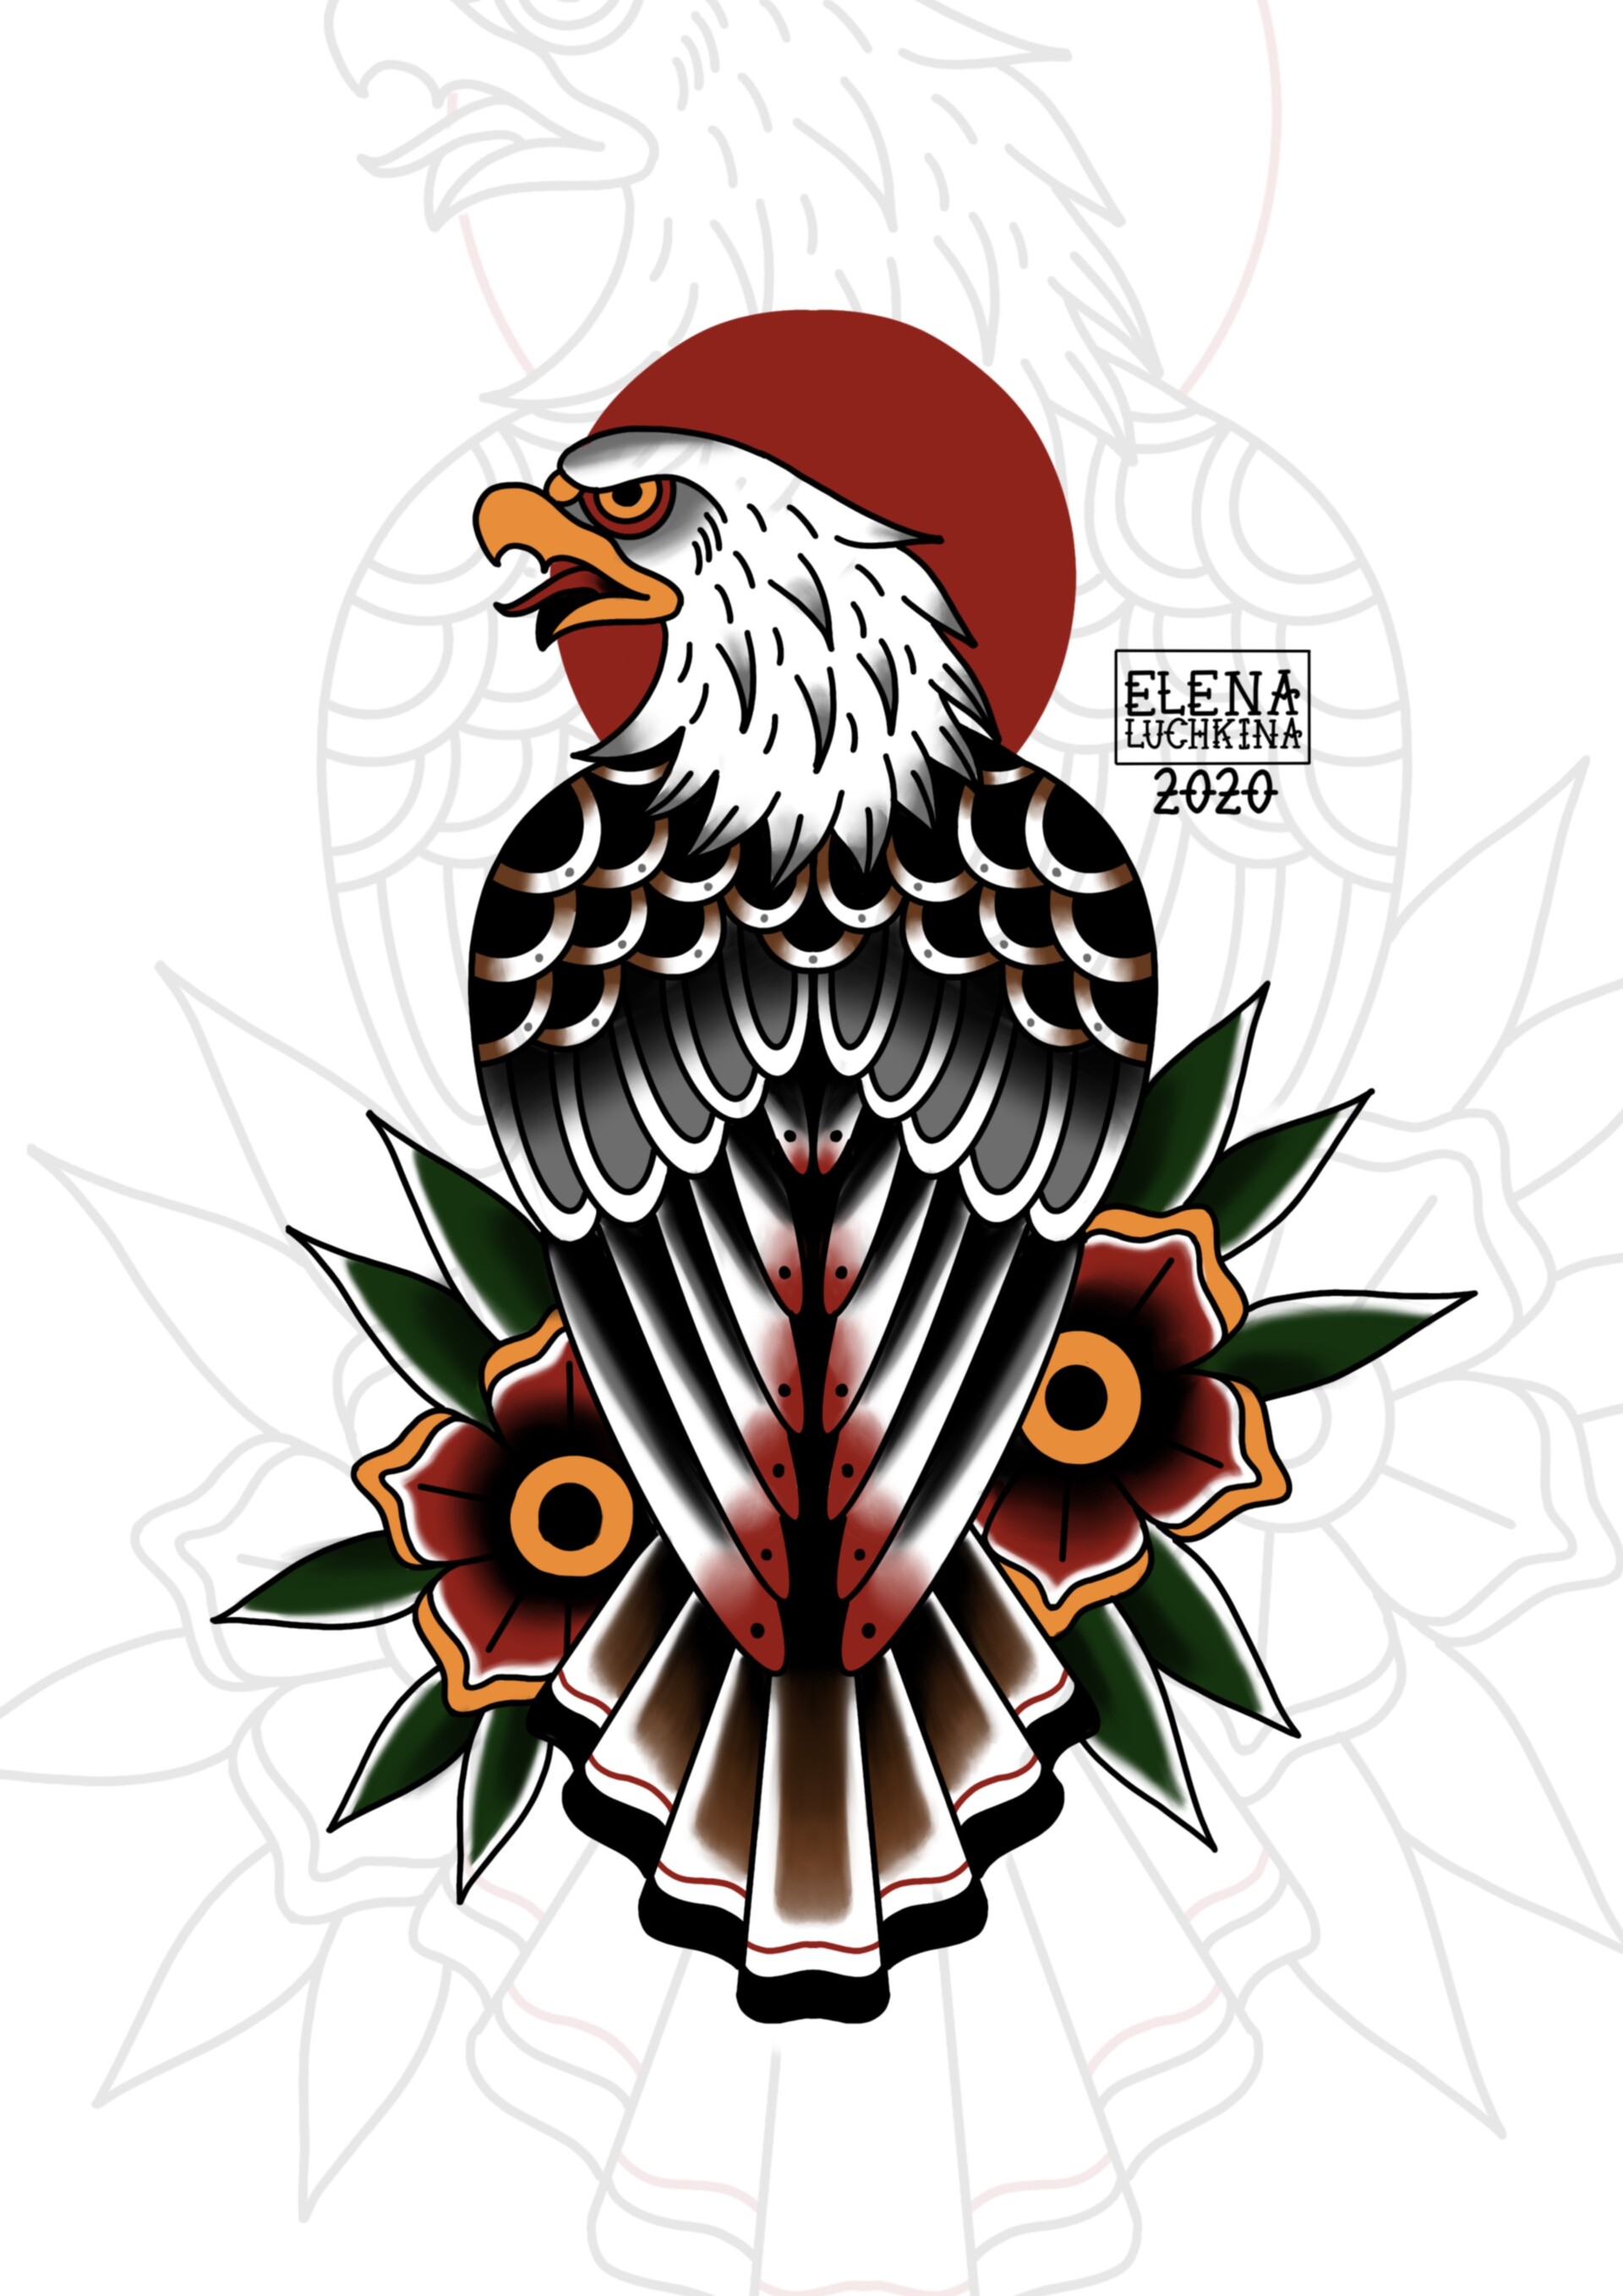 ArtStation - Old School eagle tattoo design